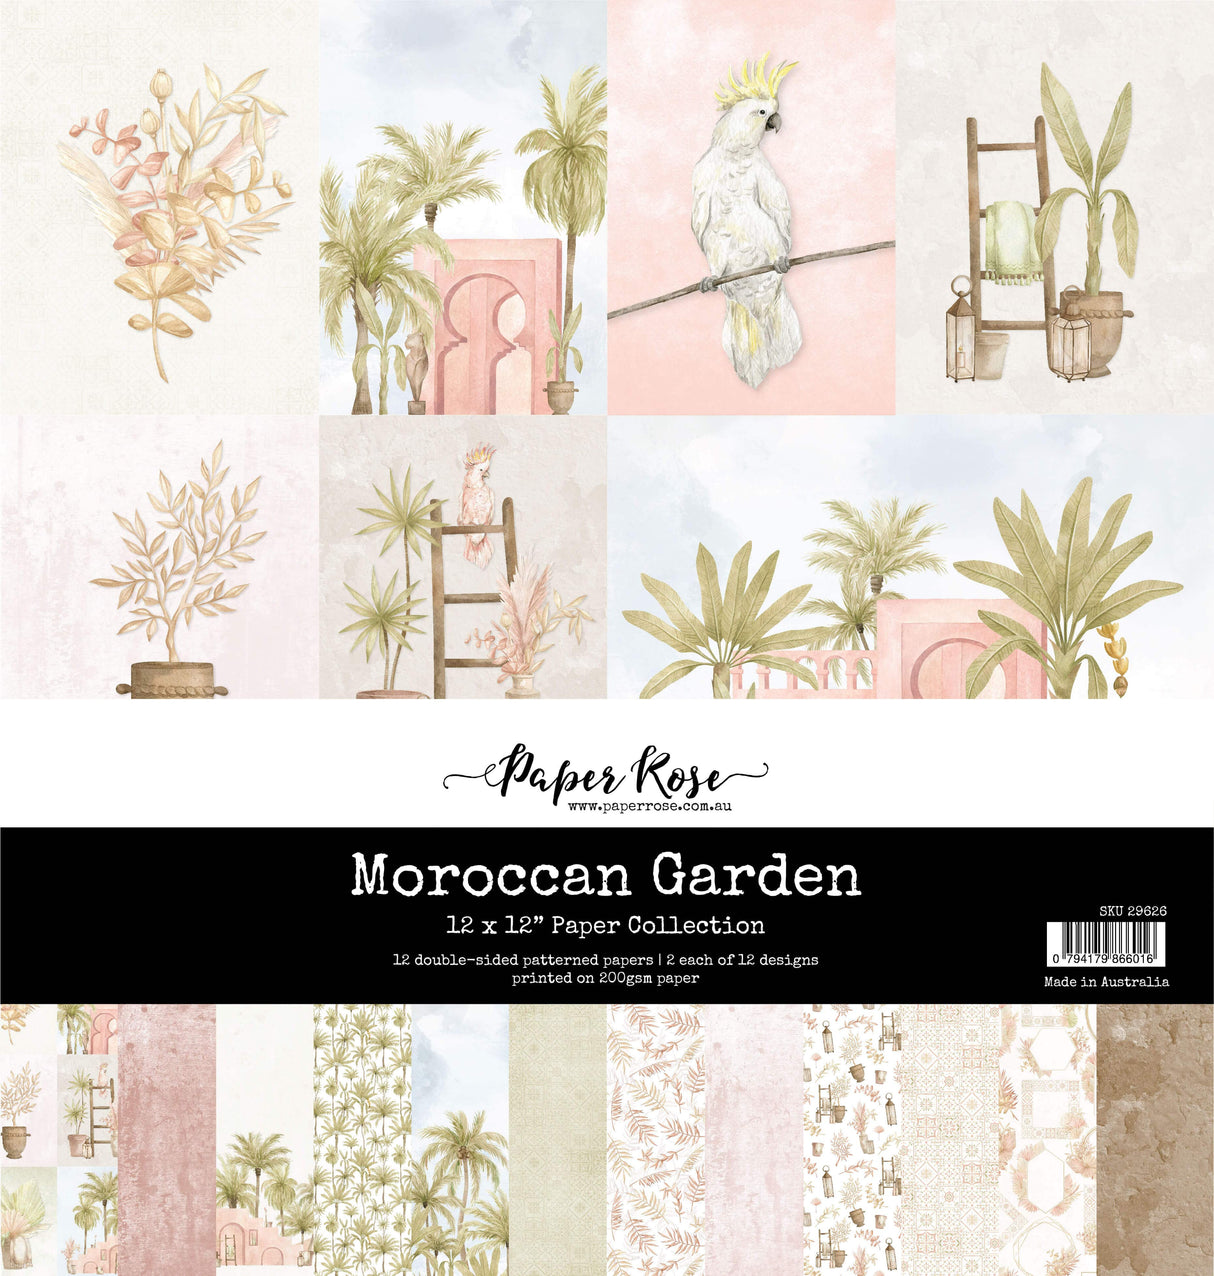 Moroccan Garden 12x12 Paper Collection 29626 - Paper Rose Studio